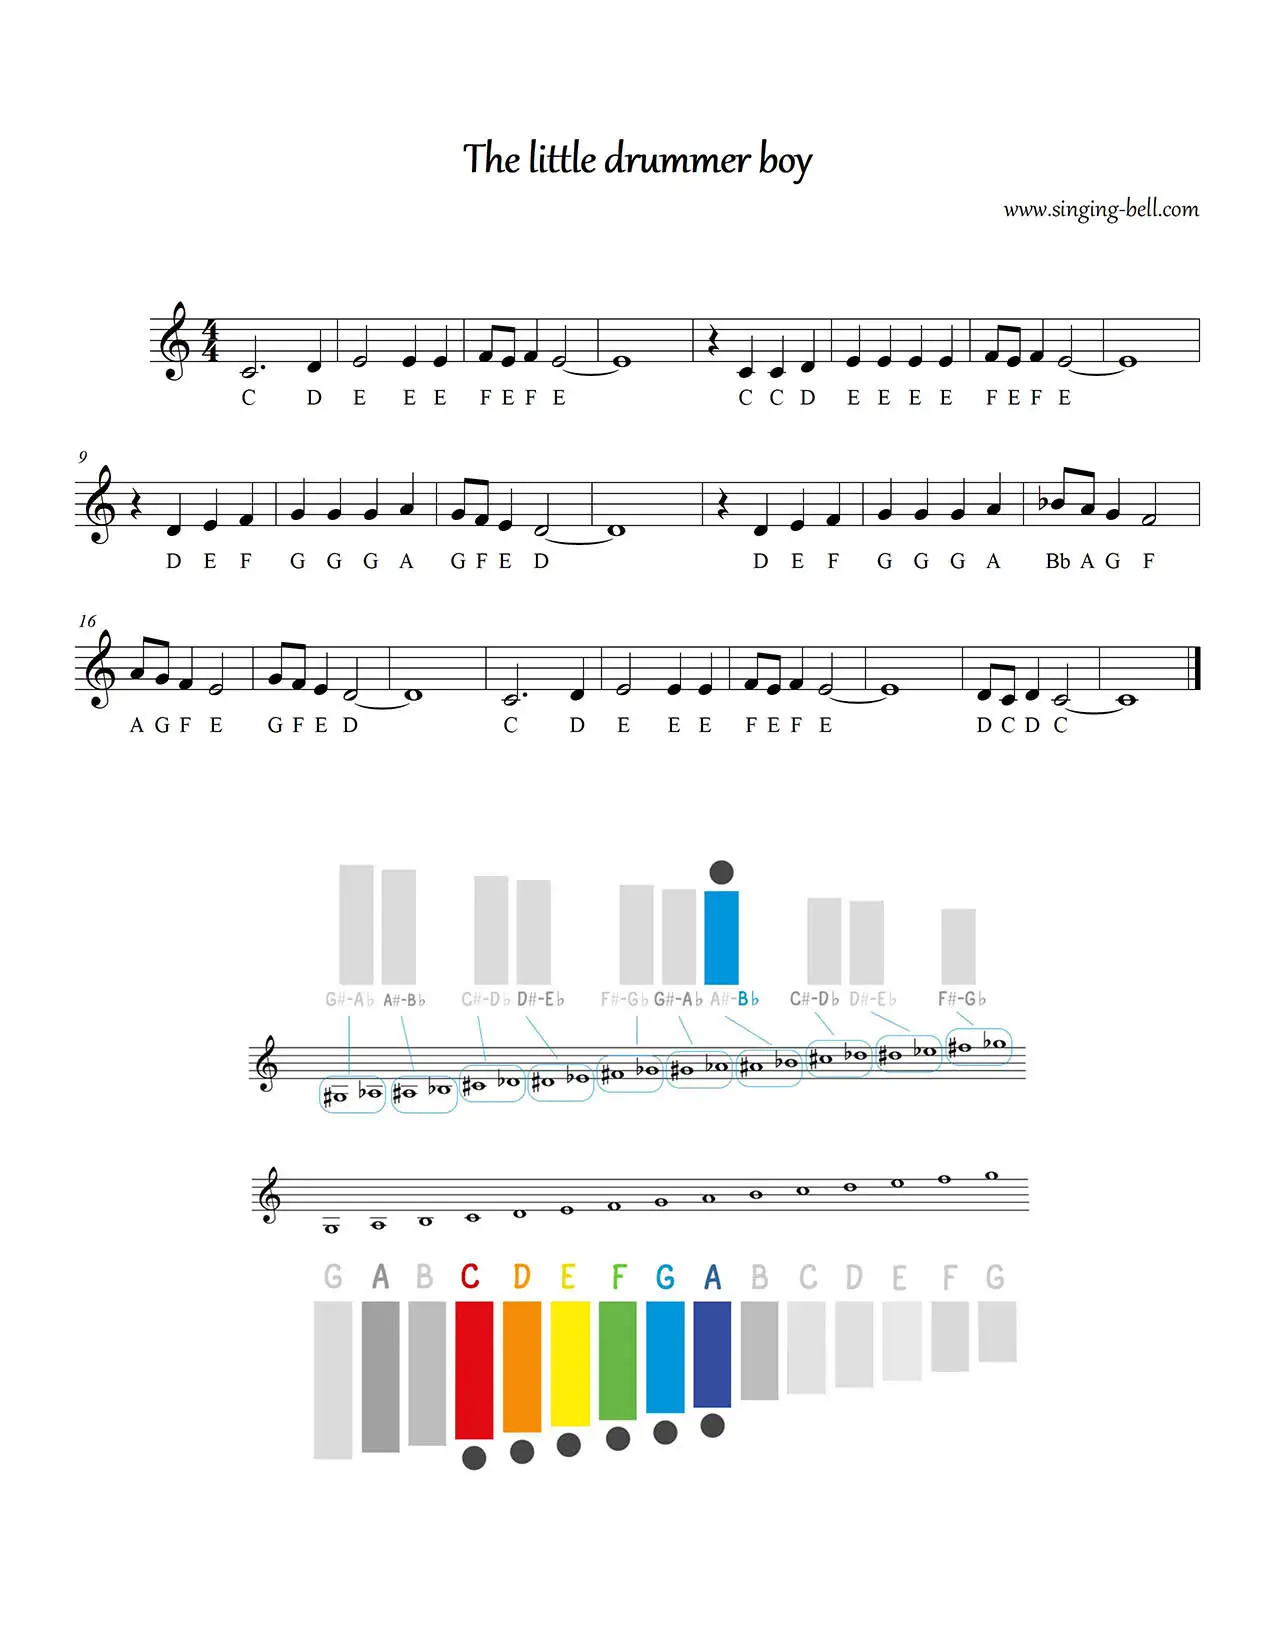 The Little Drummer Boy free xylophone glockenspiel sheet music notes pdf